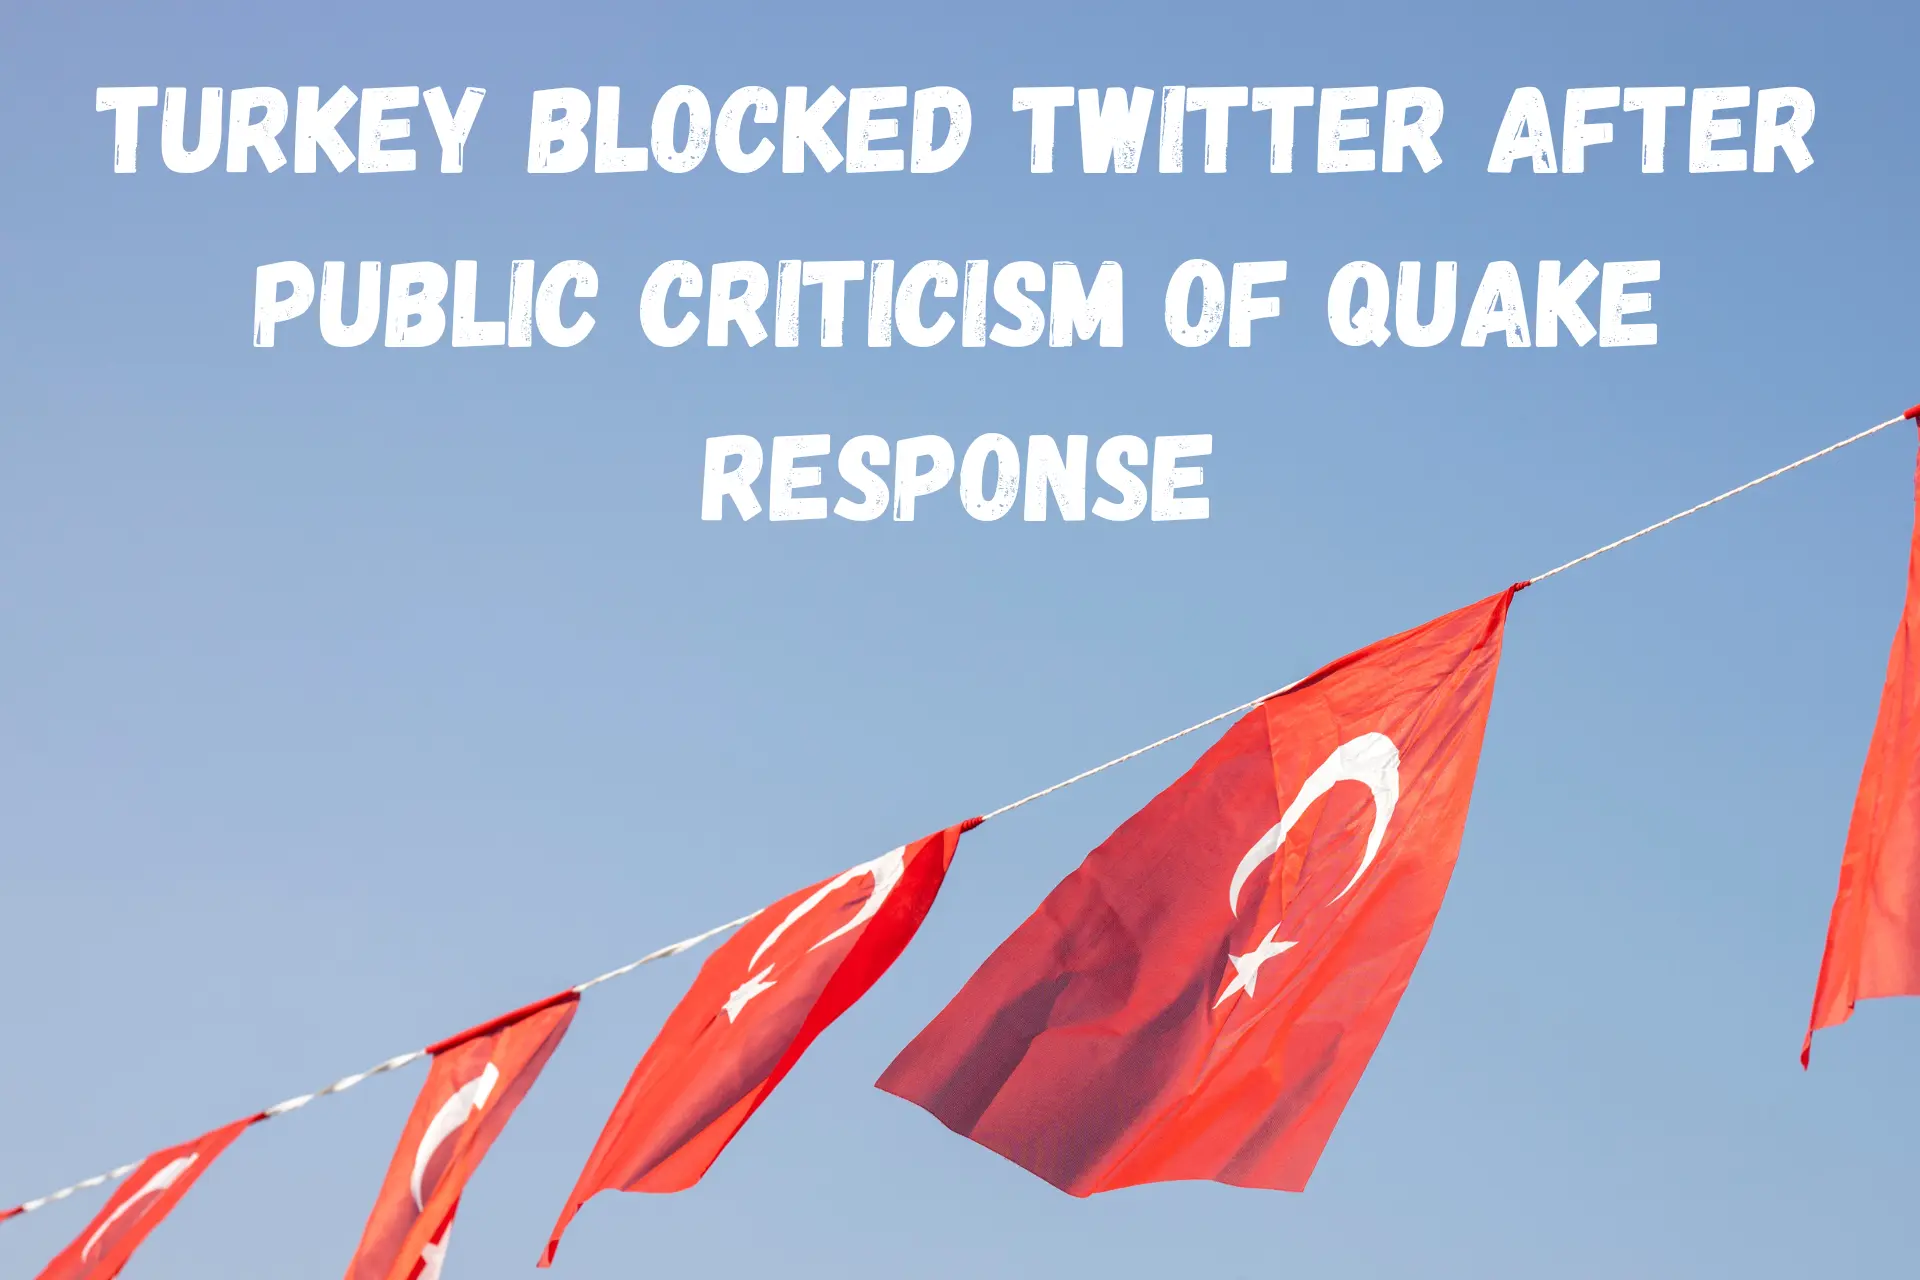 Turkey Blocked Twitter After Public Criticism of Quake Response